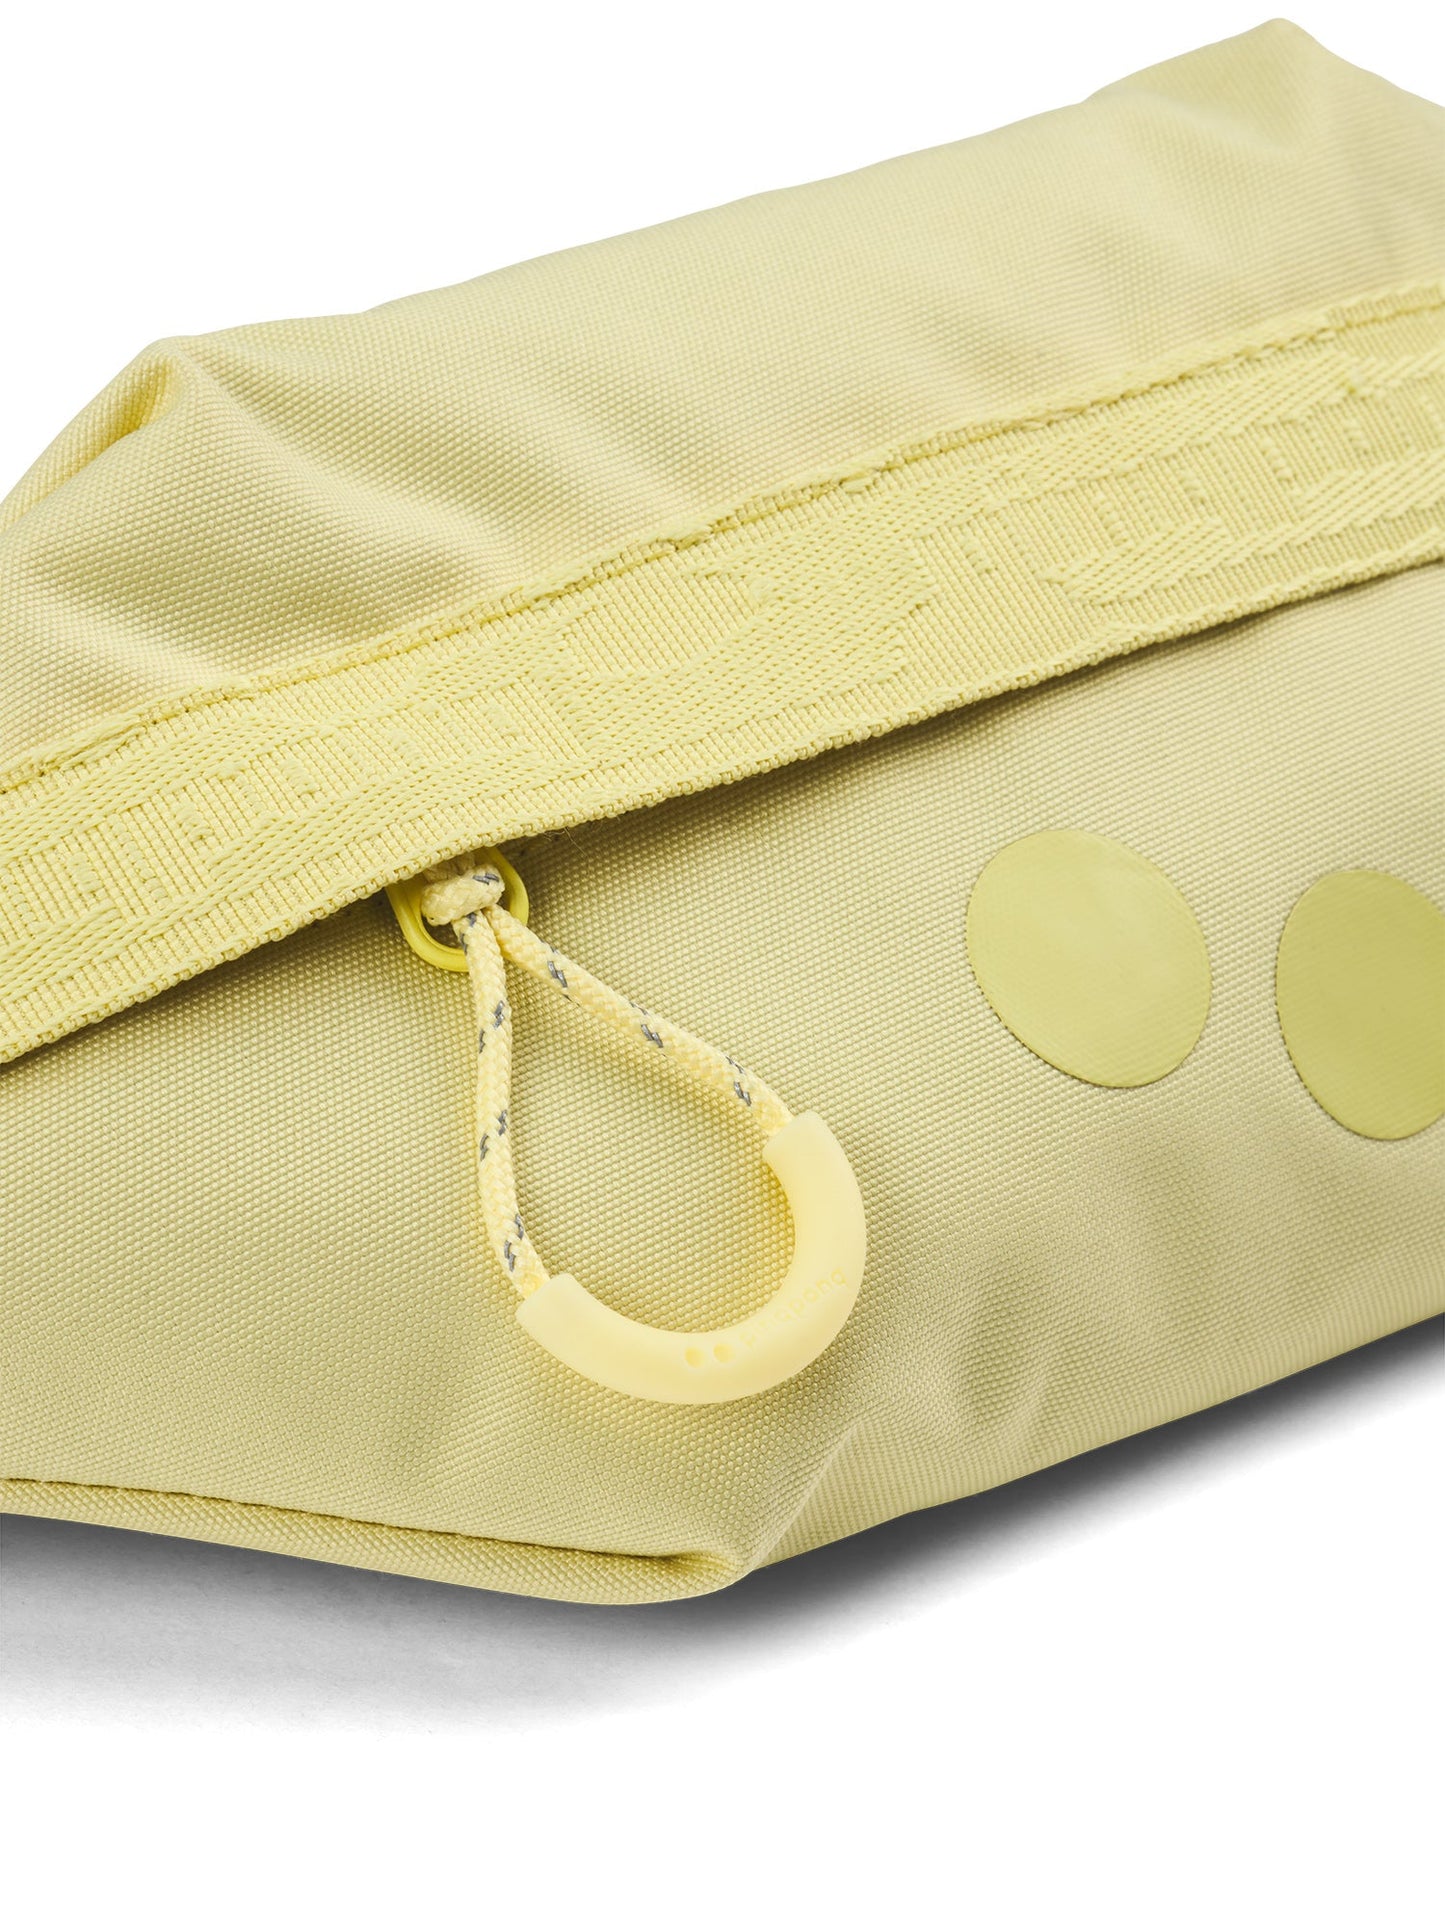 
                  
                    NIK Buttercream Yellow Bag
                  
                